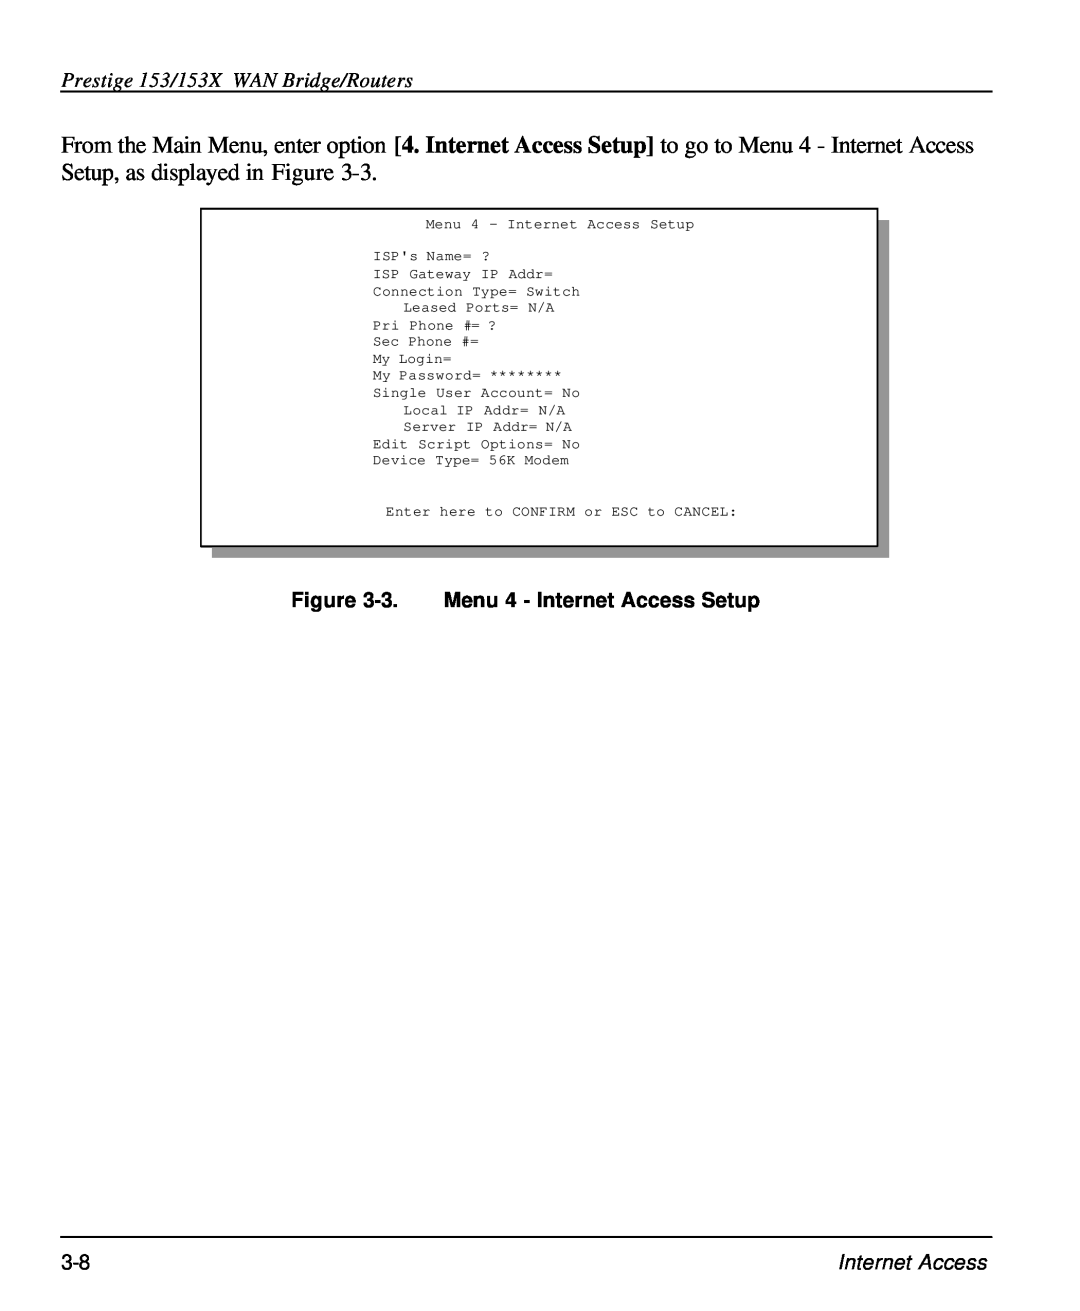 ZyXEL Communications user manual Prestige 153/153X WAN Bridge/Routers, 3. Menu 4 - Internet Access Setup 